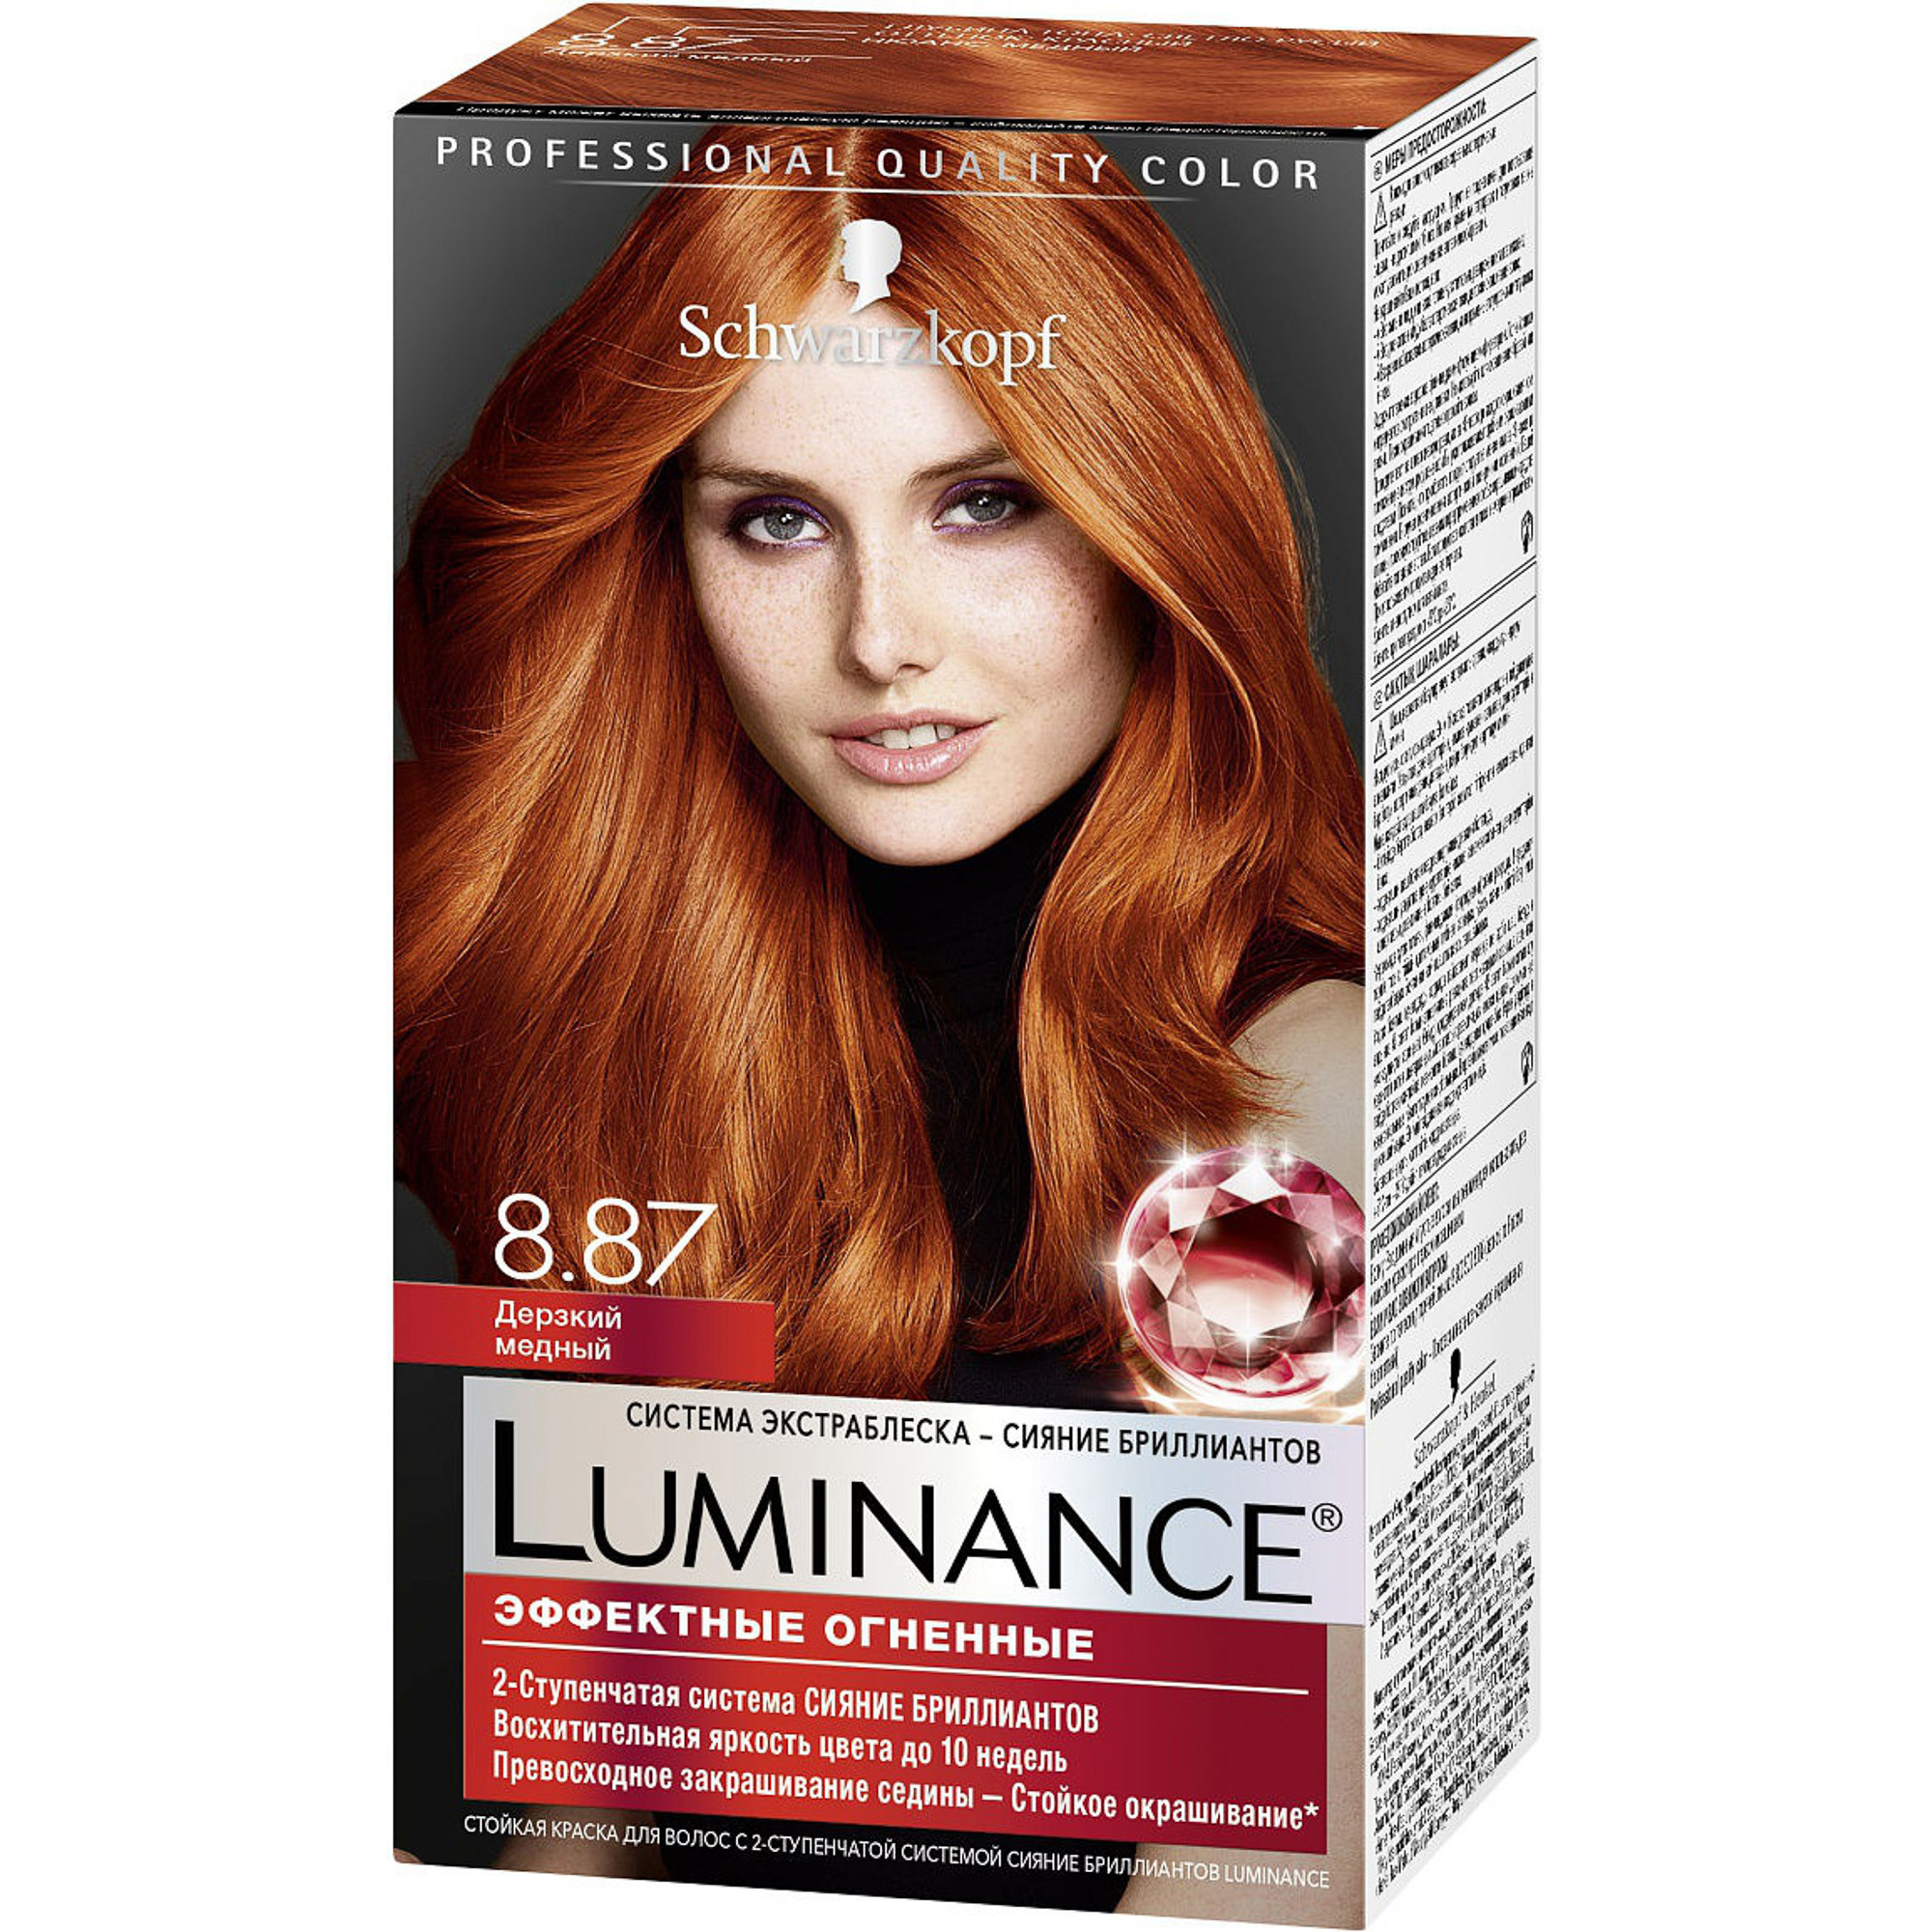 Краска для волос Schwarzkopf Luminance Color 8.87 Дерзкий медный краска для волос 8 87 дерзкий медный luminance люминенс 165мл